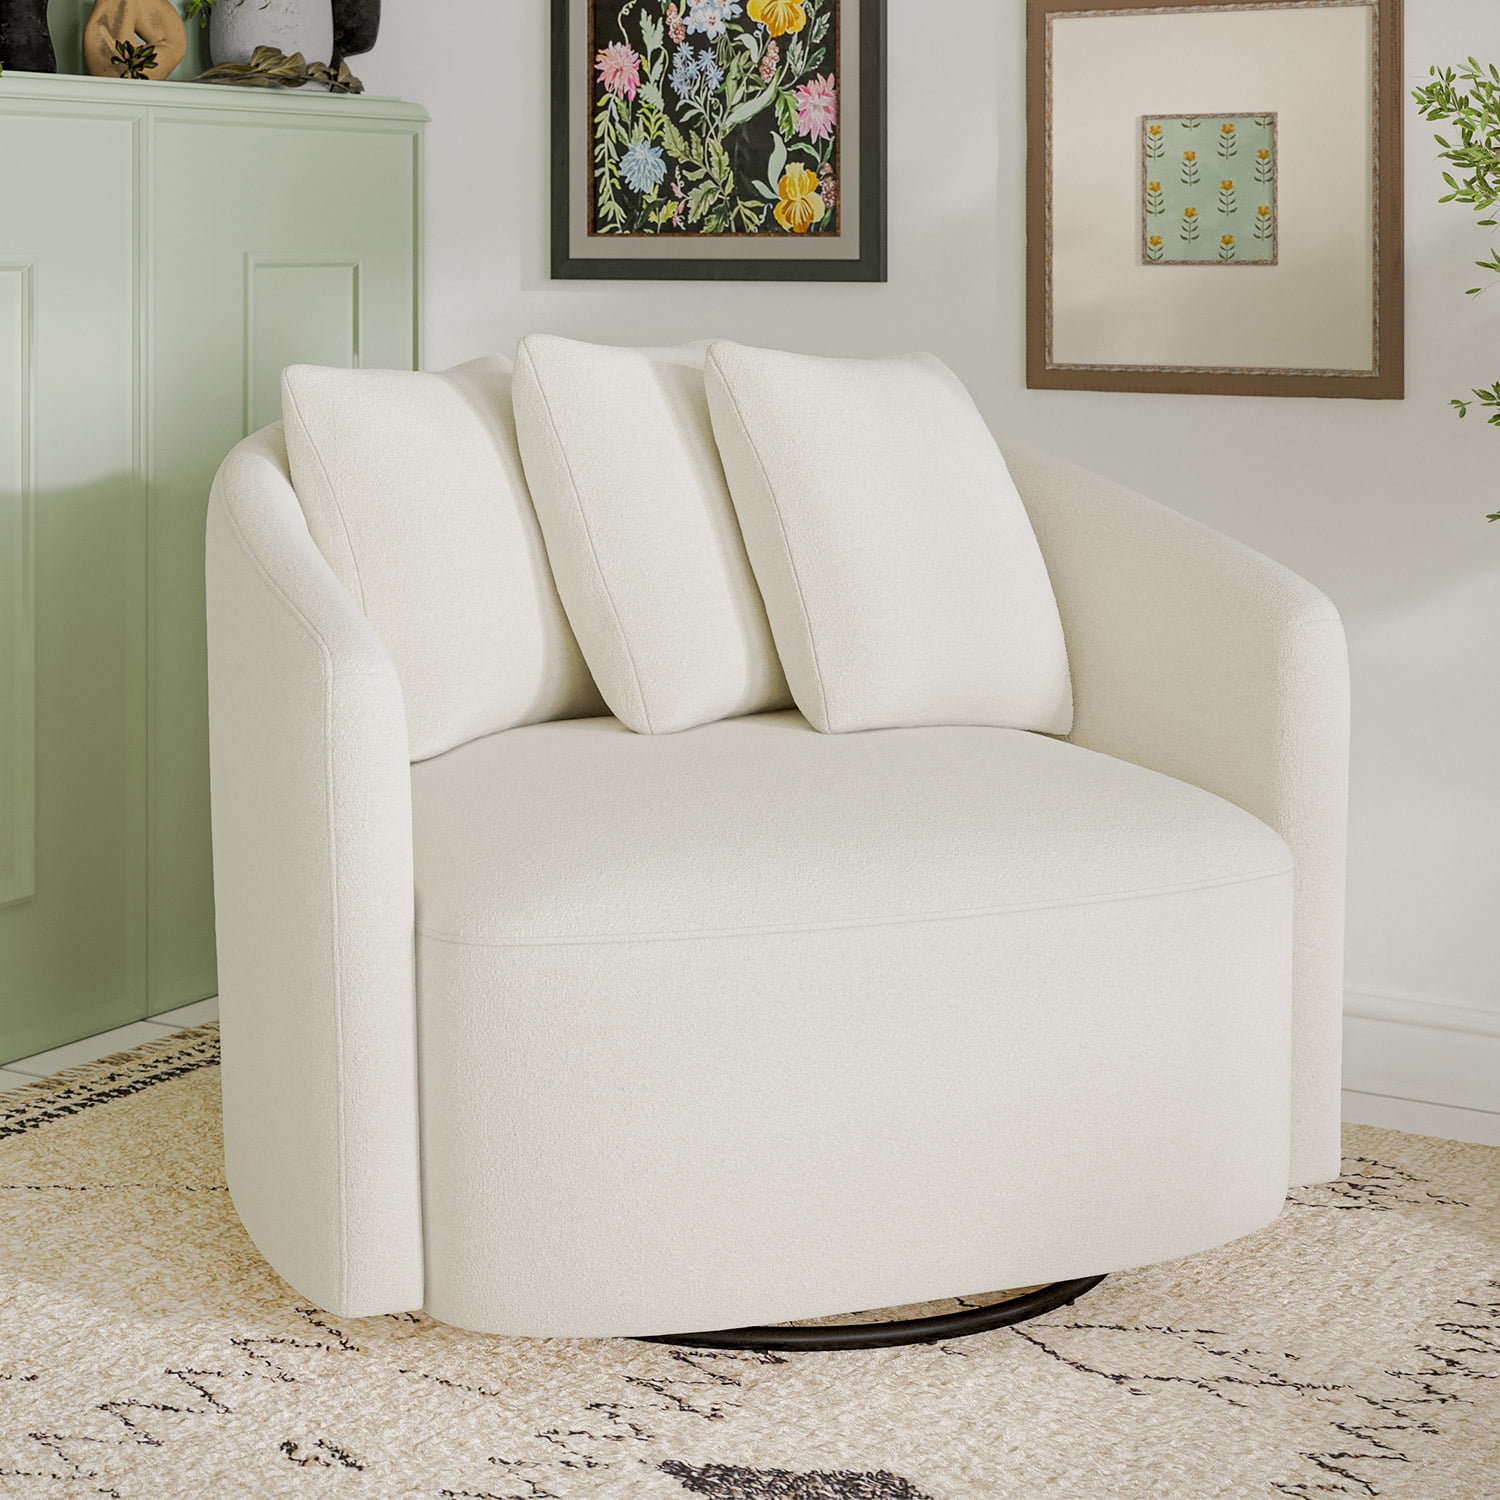 Beautiful Drew Chair by Drew Barrymore, Cream